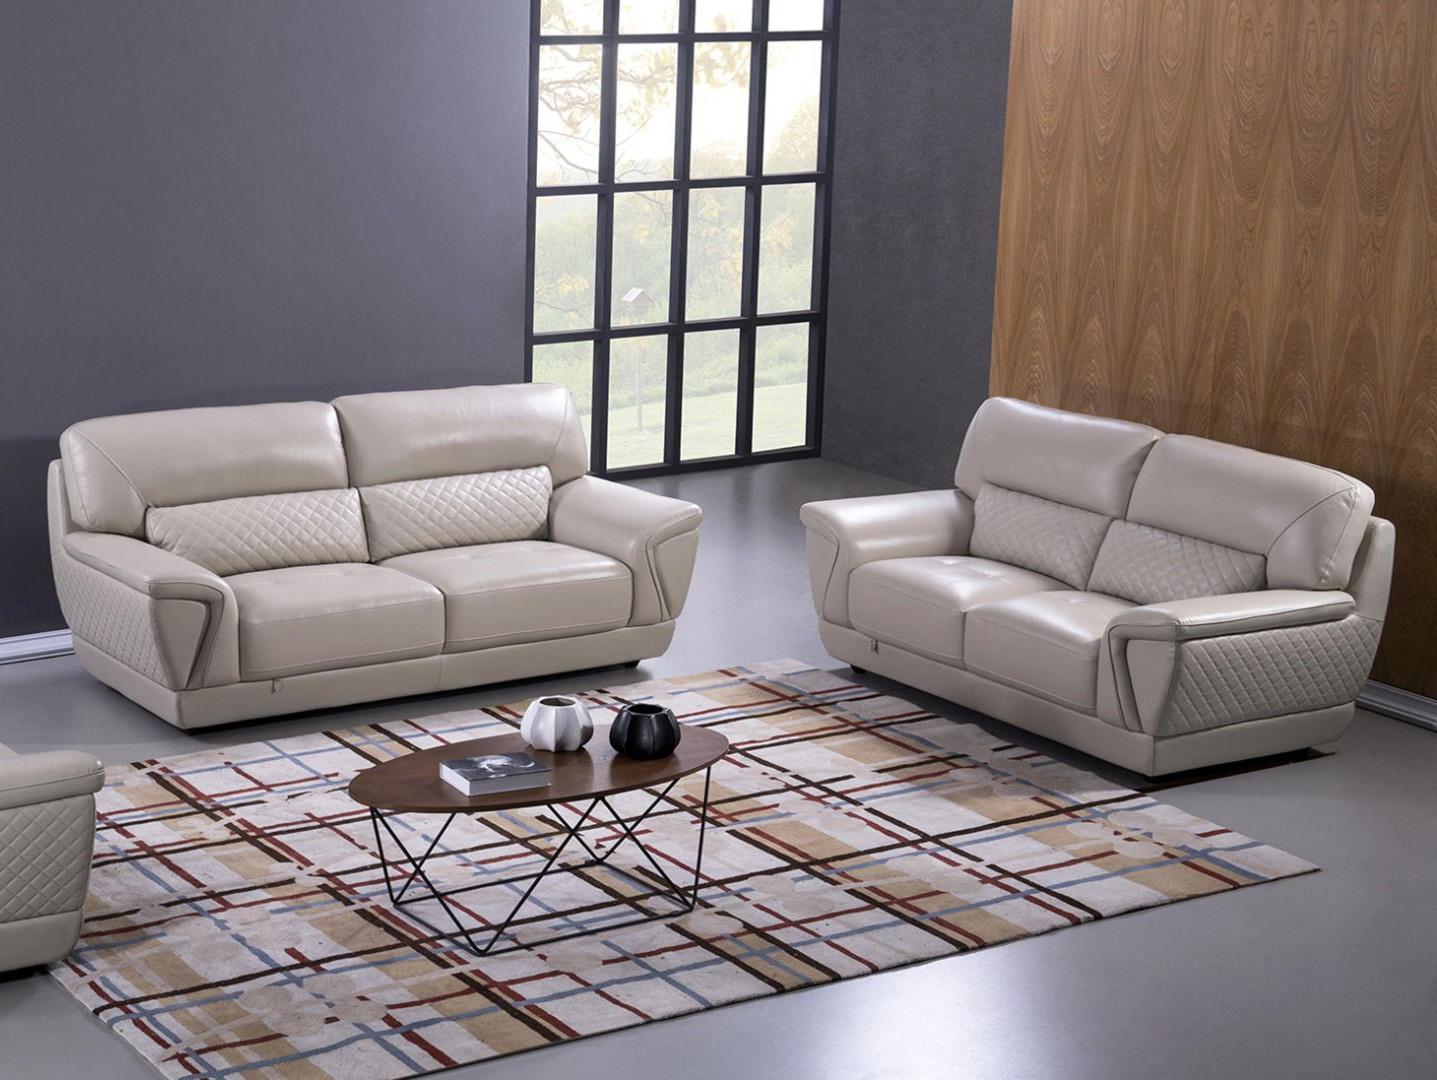 

    
American Eagle Furniture EK099-LG-LS Loveseat Light Gray EK099-LG-LS
